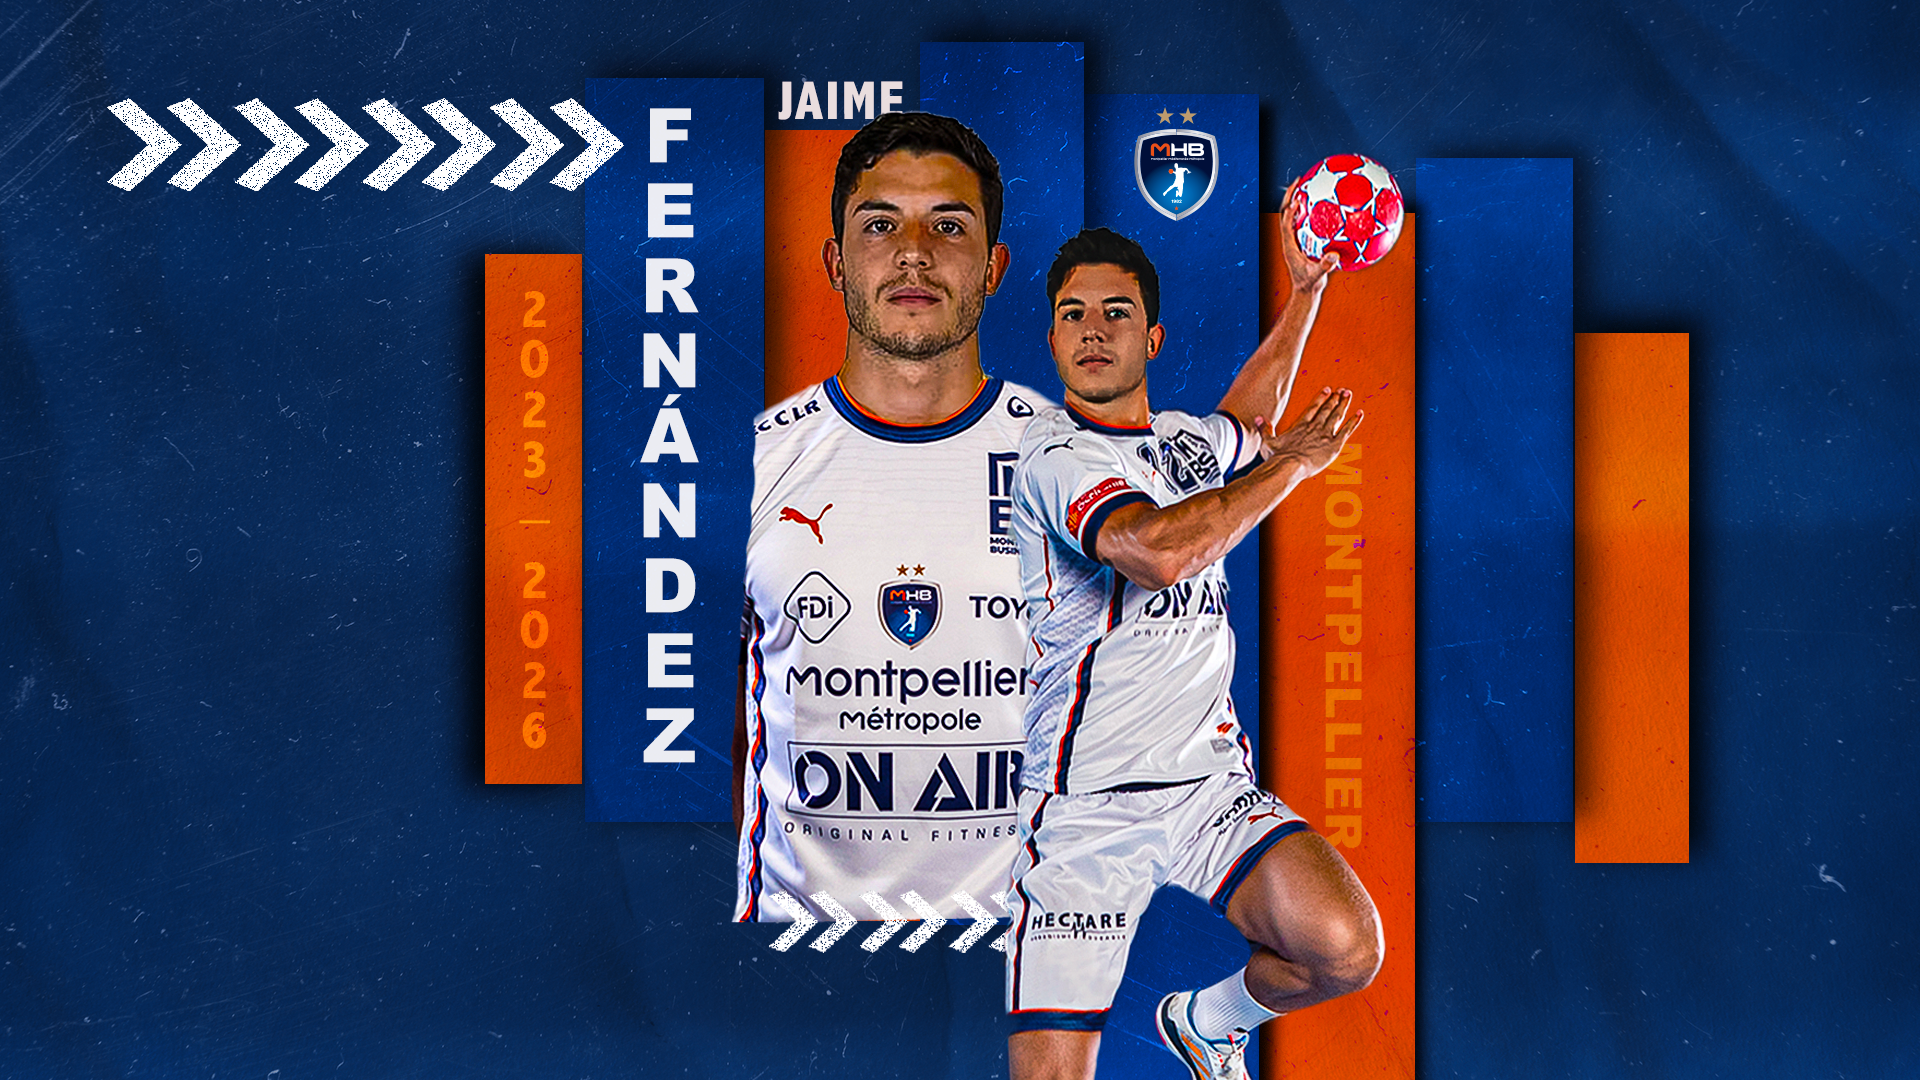 Le Montpellier Handball recrute Jaime Fernández